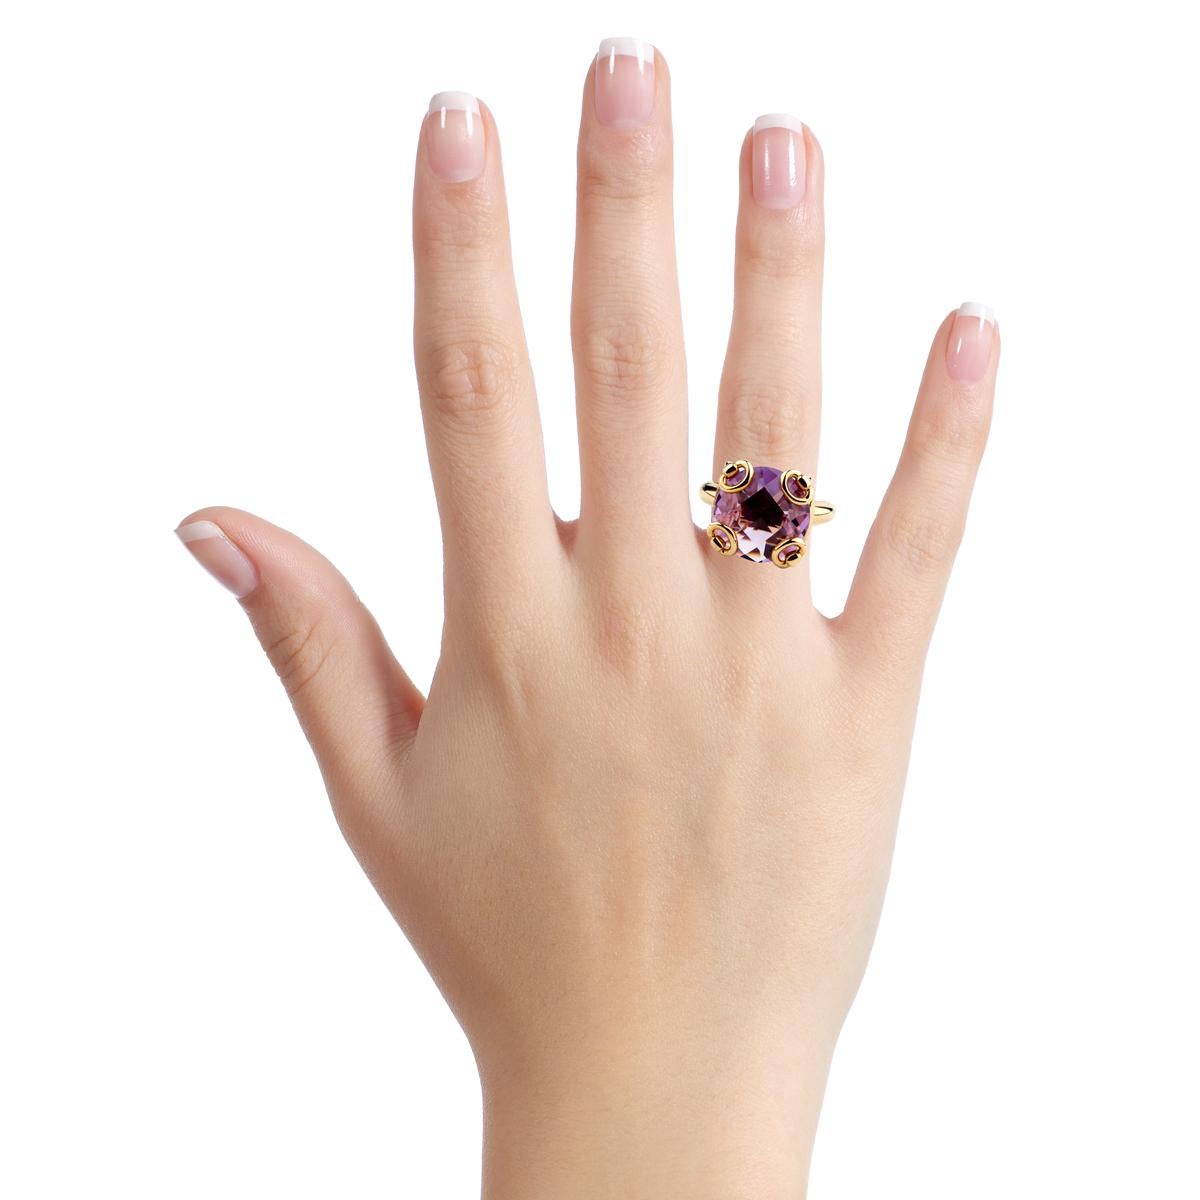 Women's Gucci Horsebit Amethyst Gold Ring